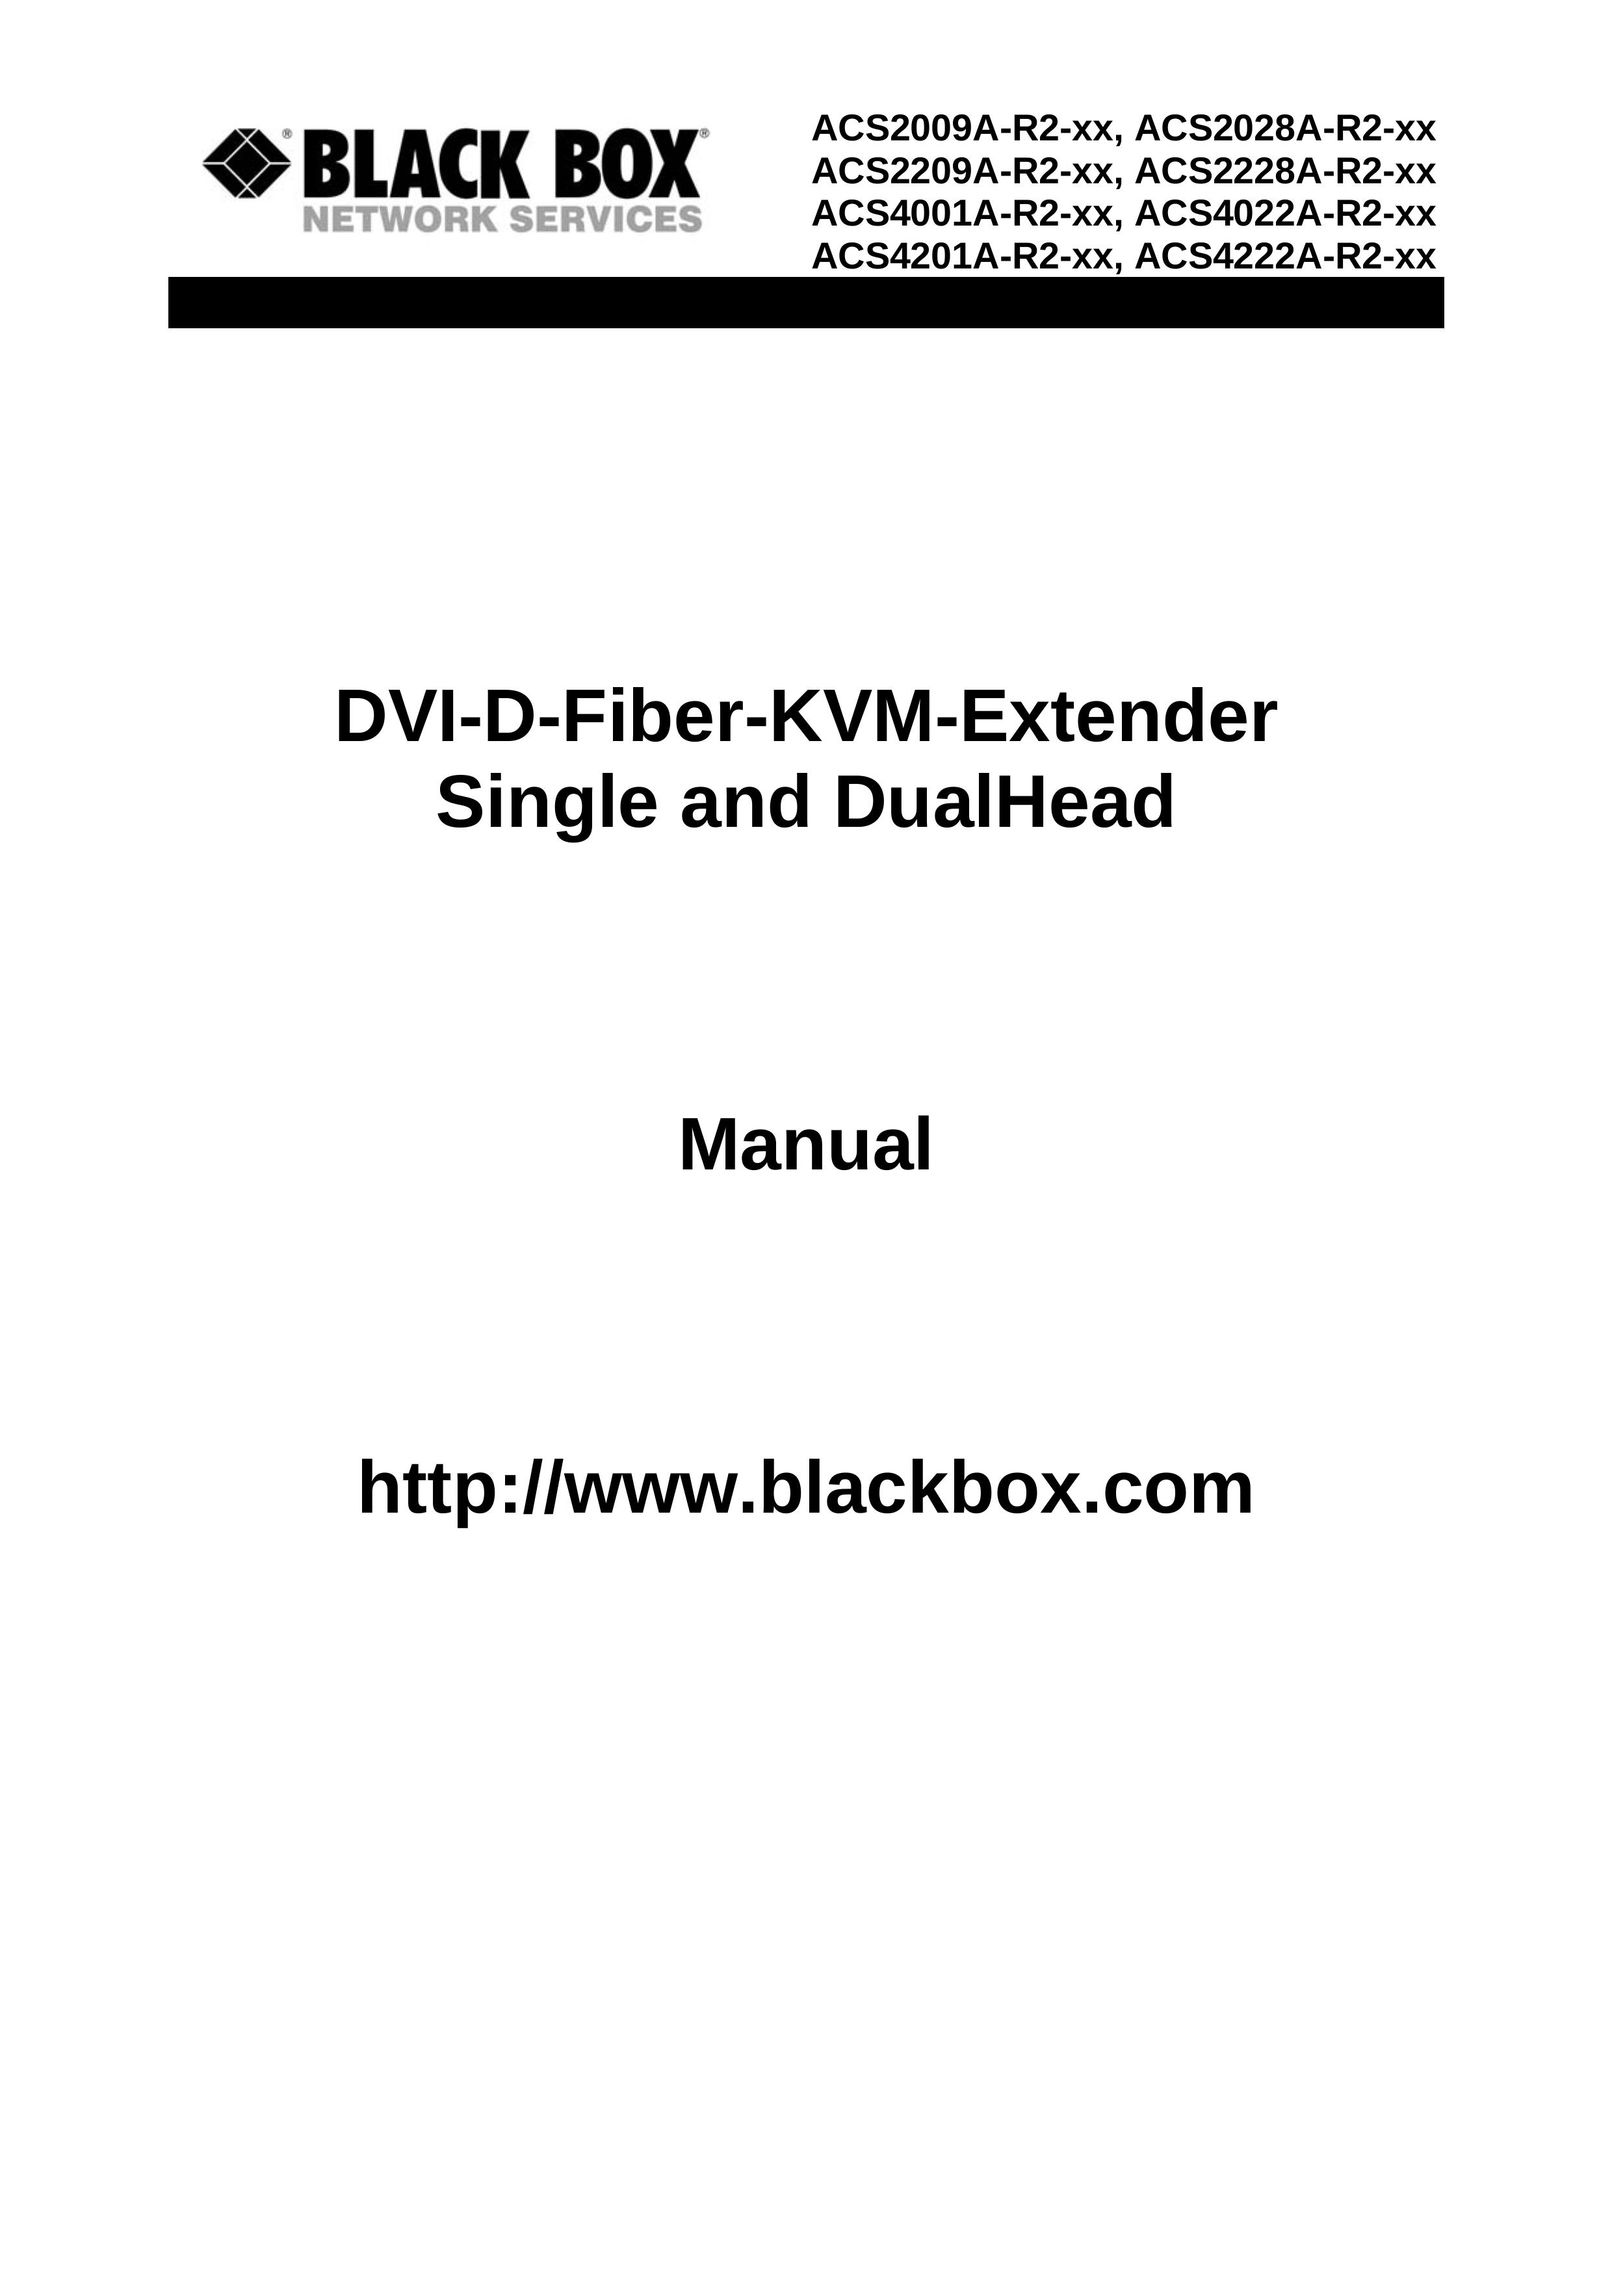 Black Box ACS4222A-R2-xx Network Hardware User Manual